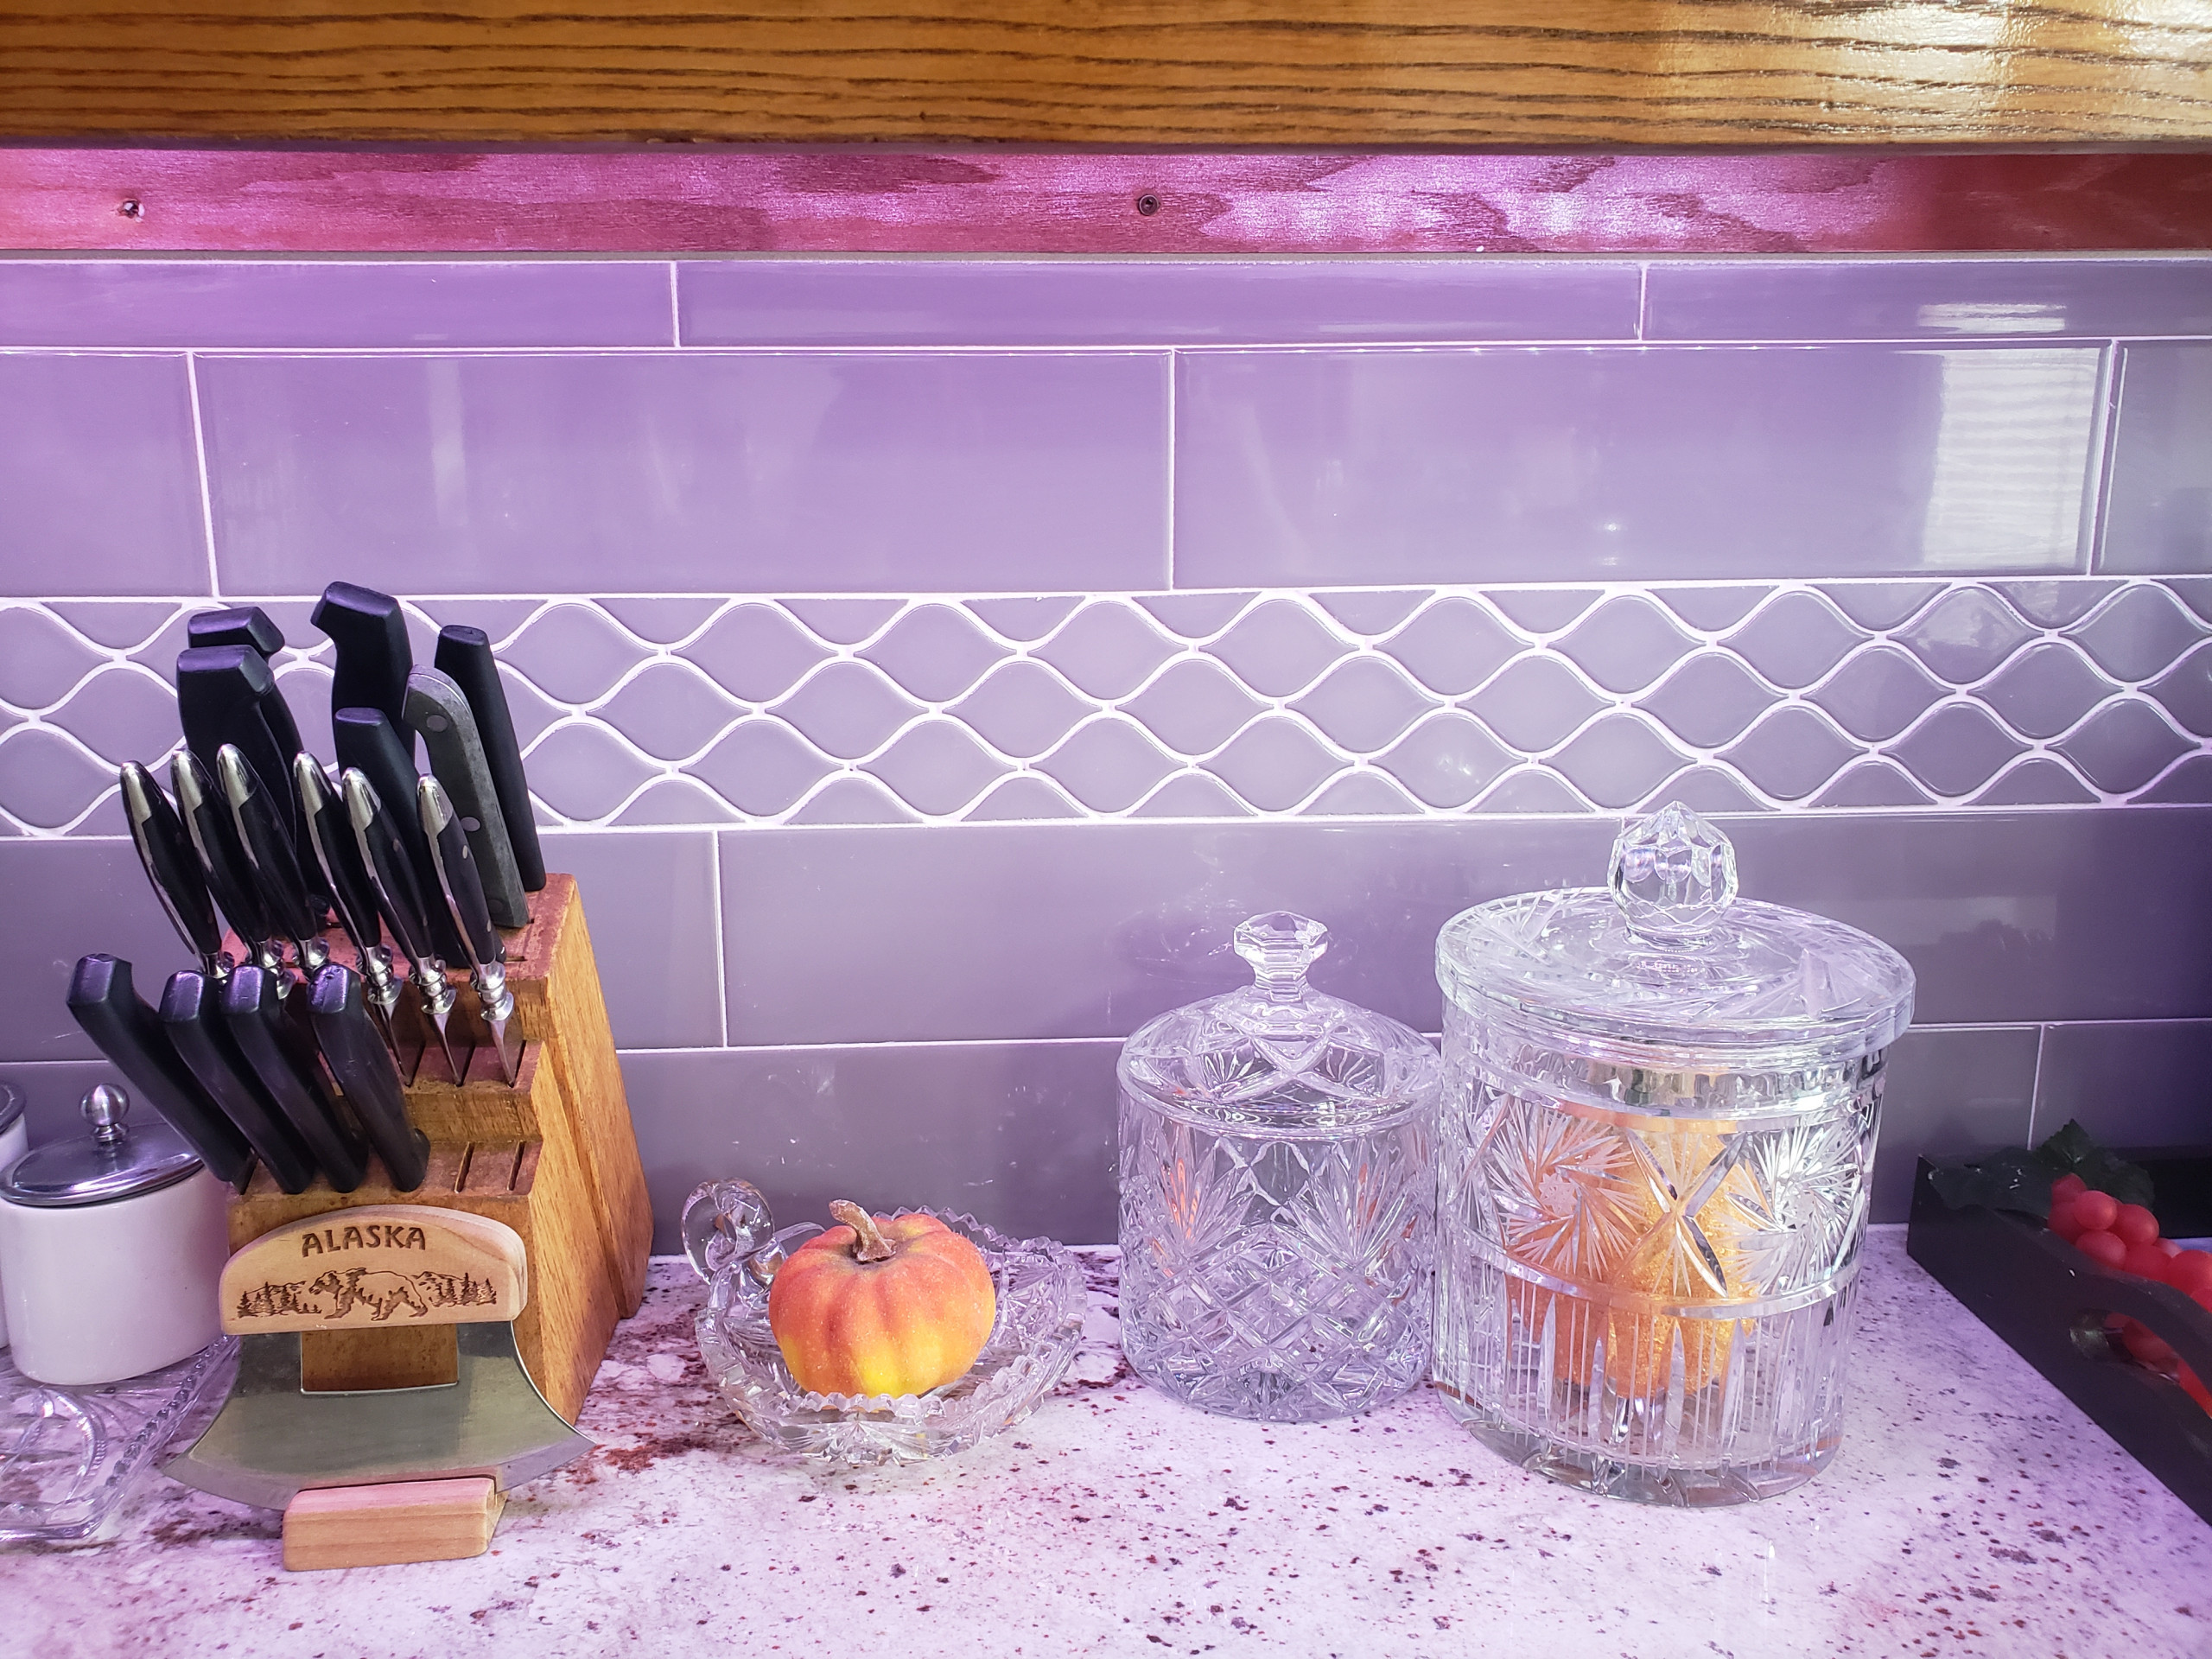 75 Purple Kitchen with Glass Tile Backsplash Ideas You'll Love